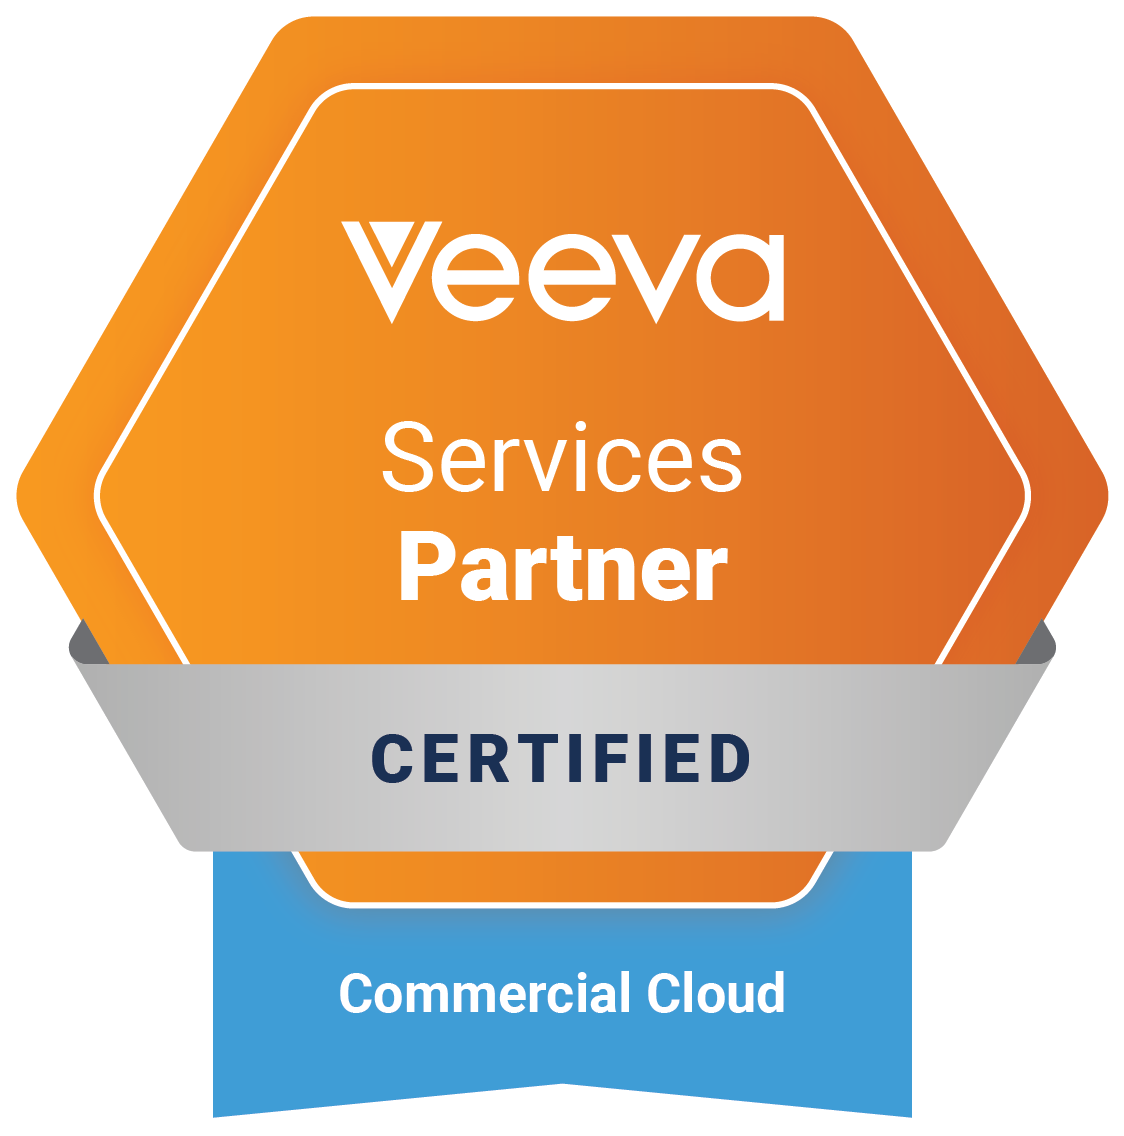 VEEVA Service Partner Certified Commercial Cloud